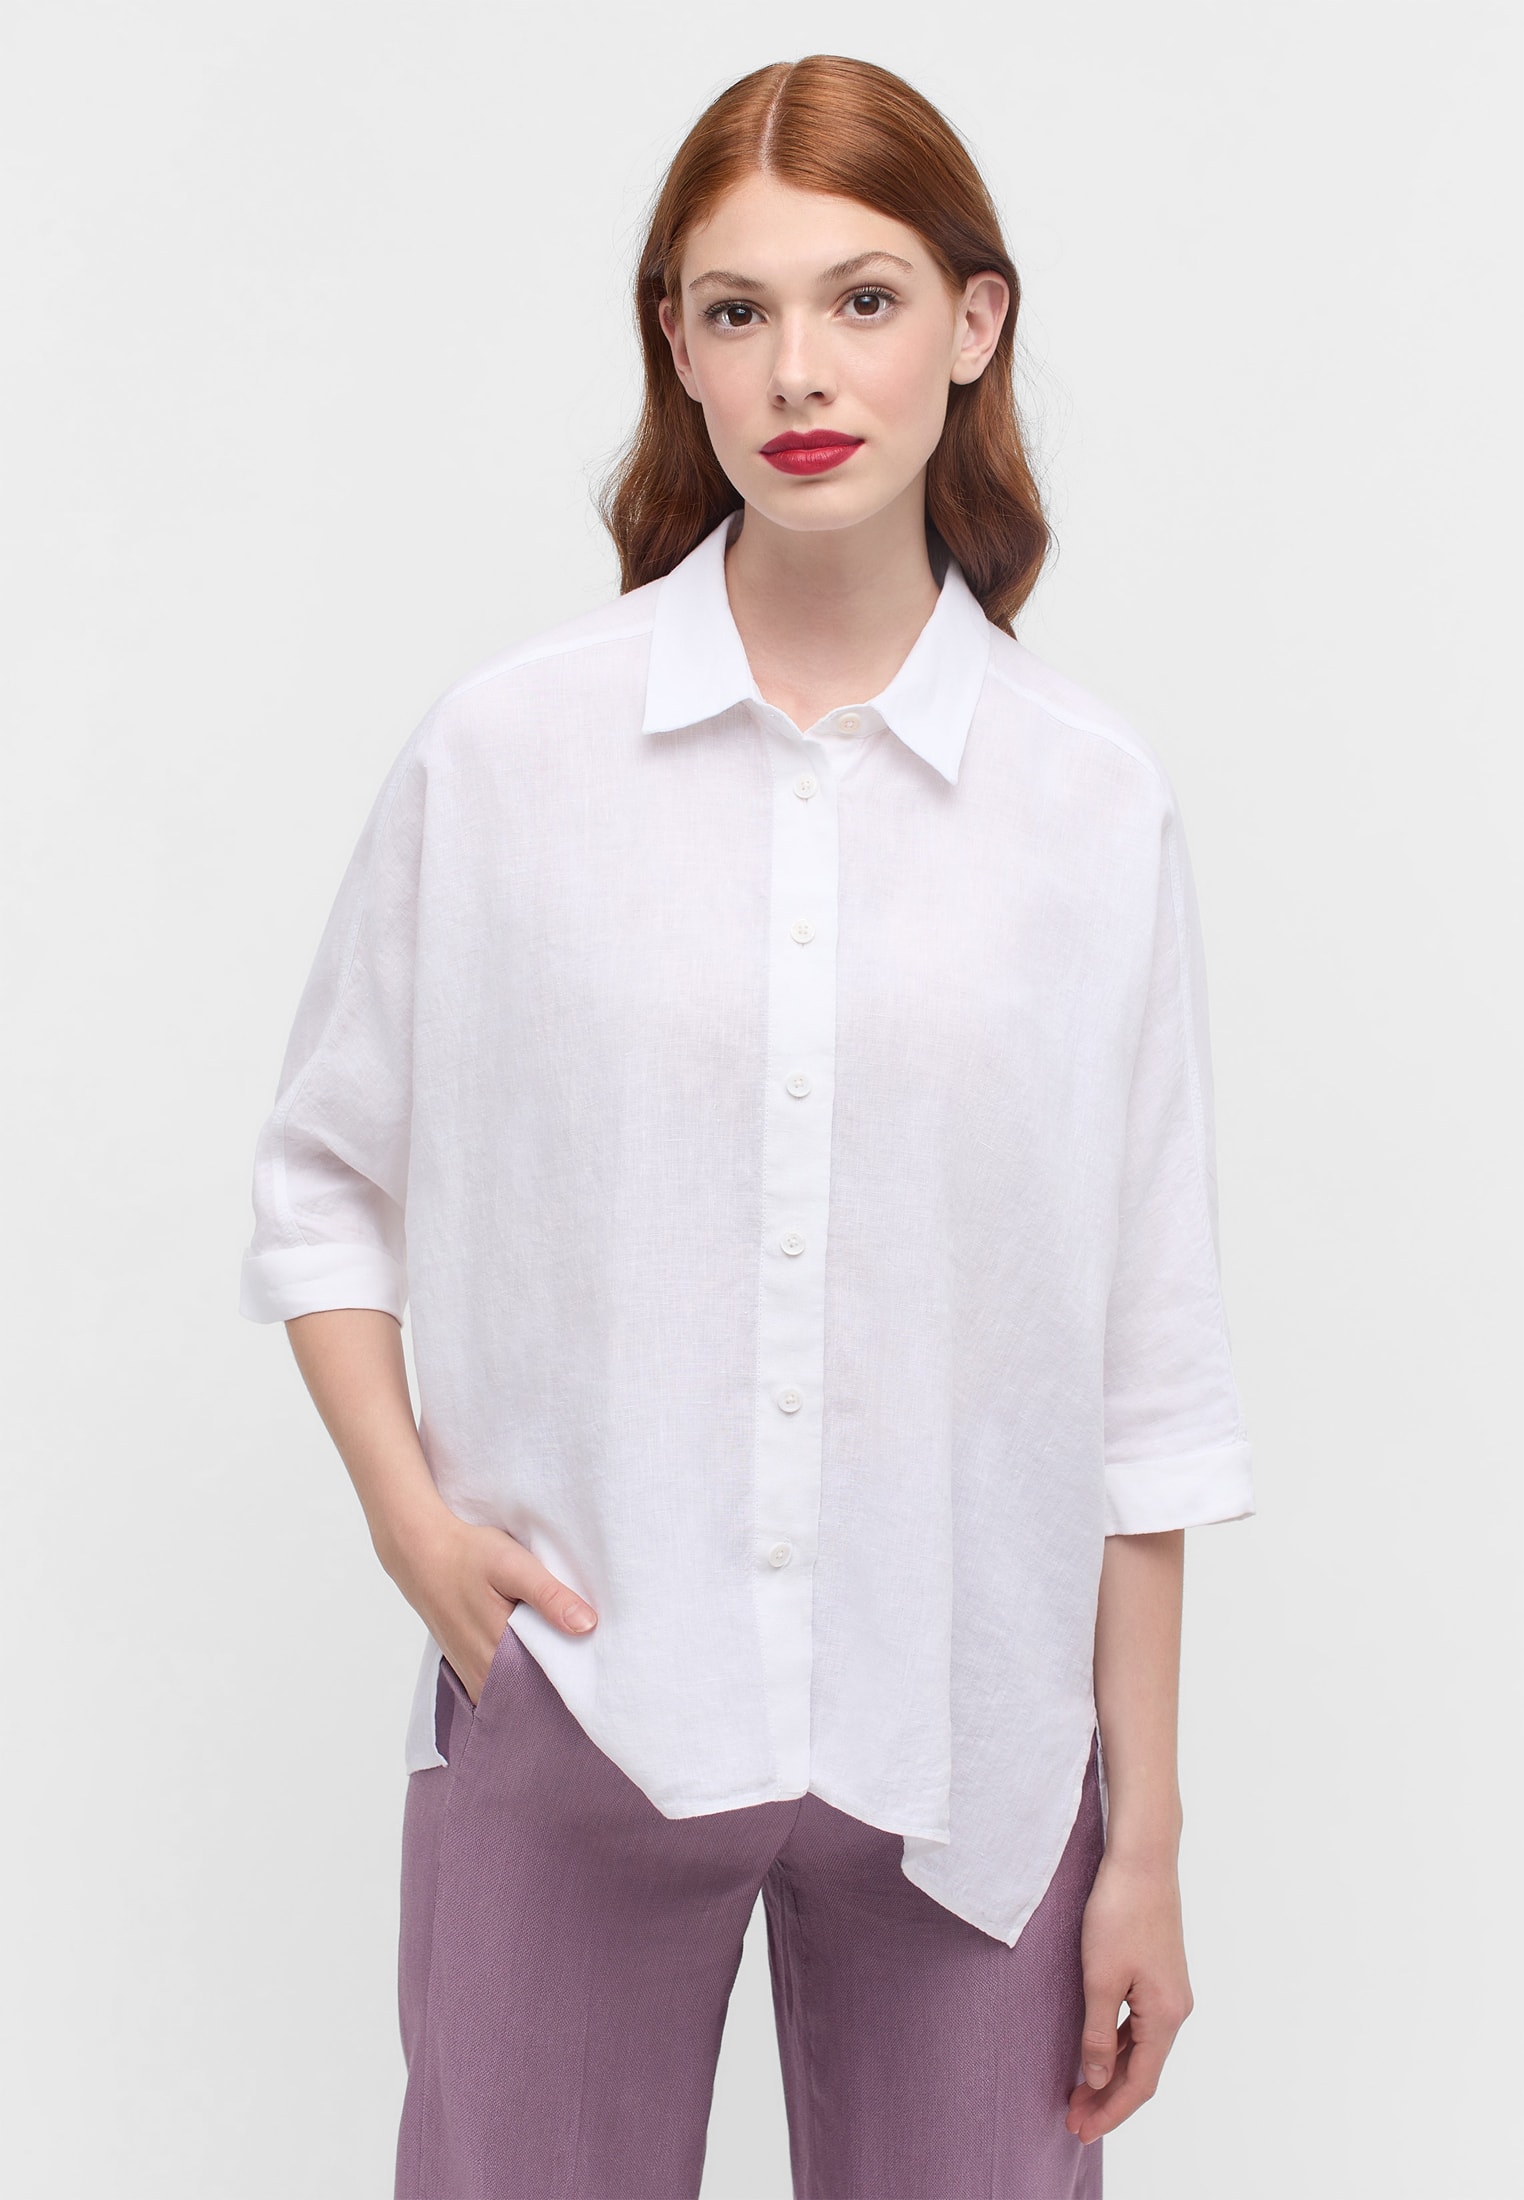 Tunic White Shirt Women Chiffon Flower Embroidery Blouse V neck Office –  ETERNA